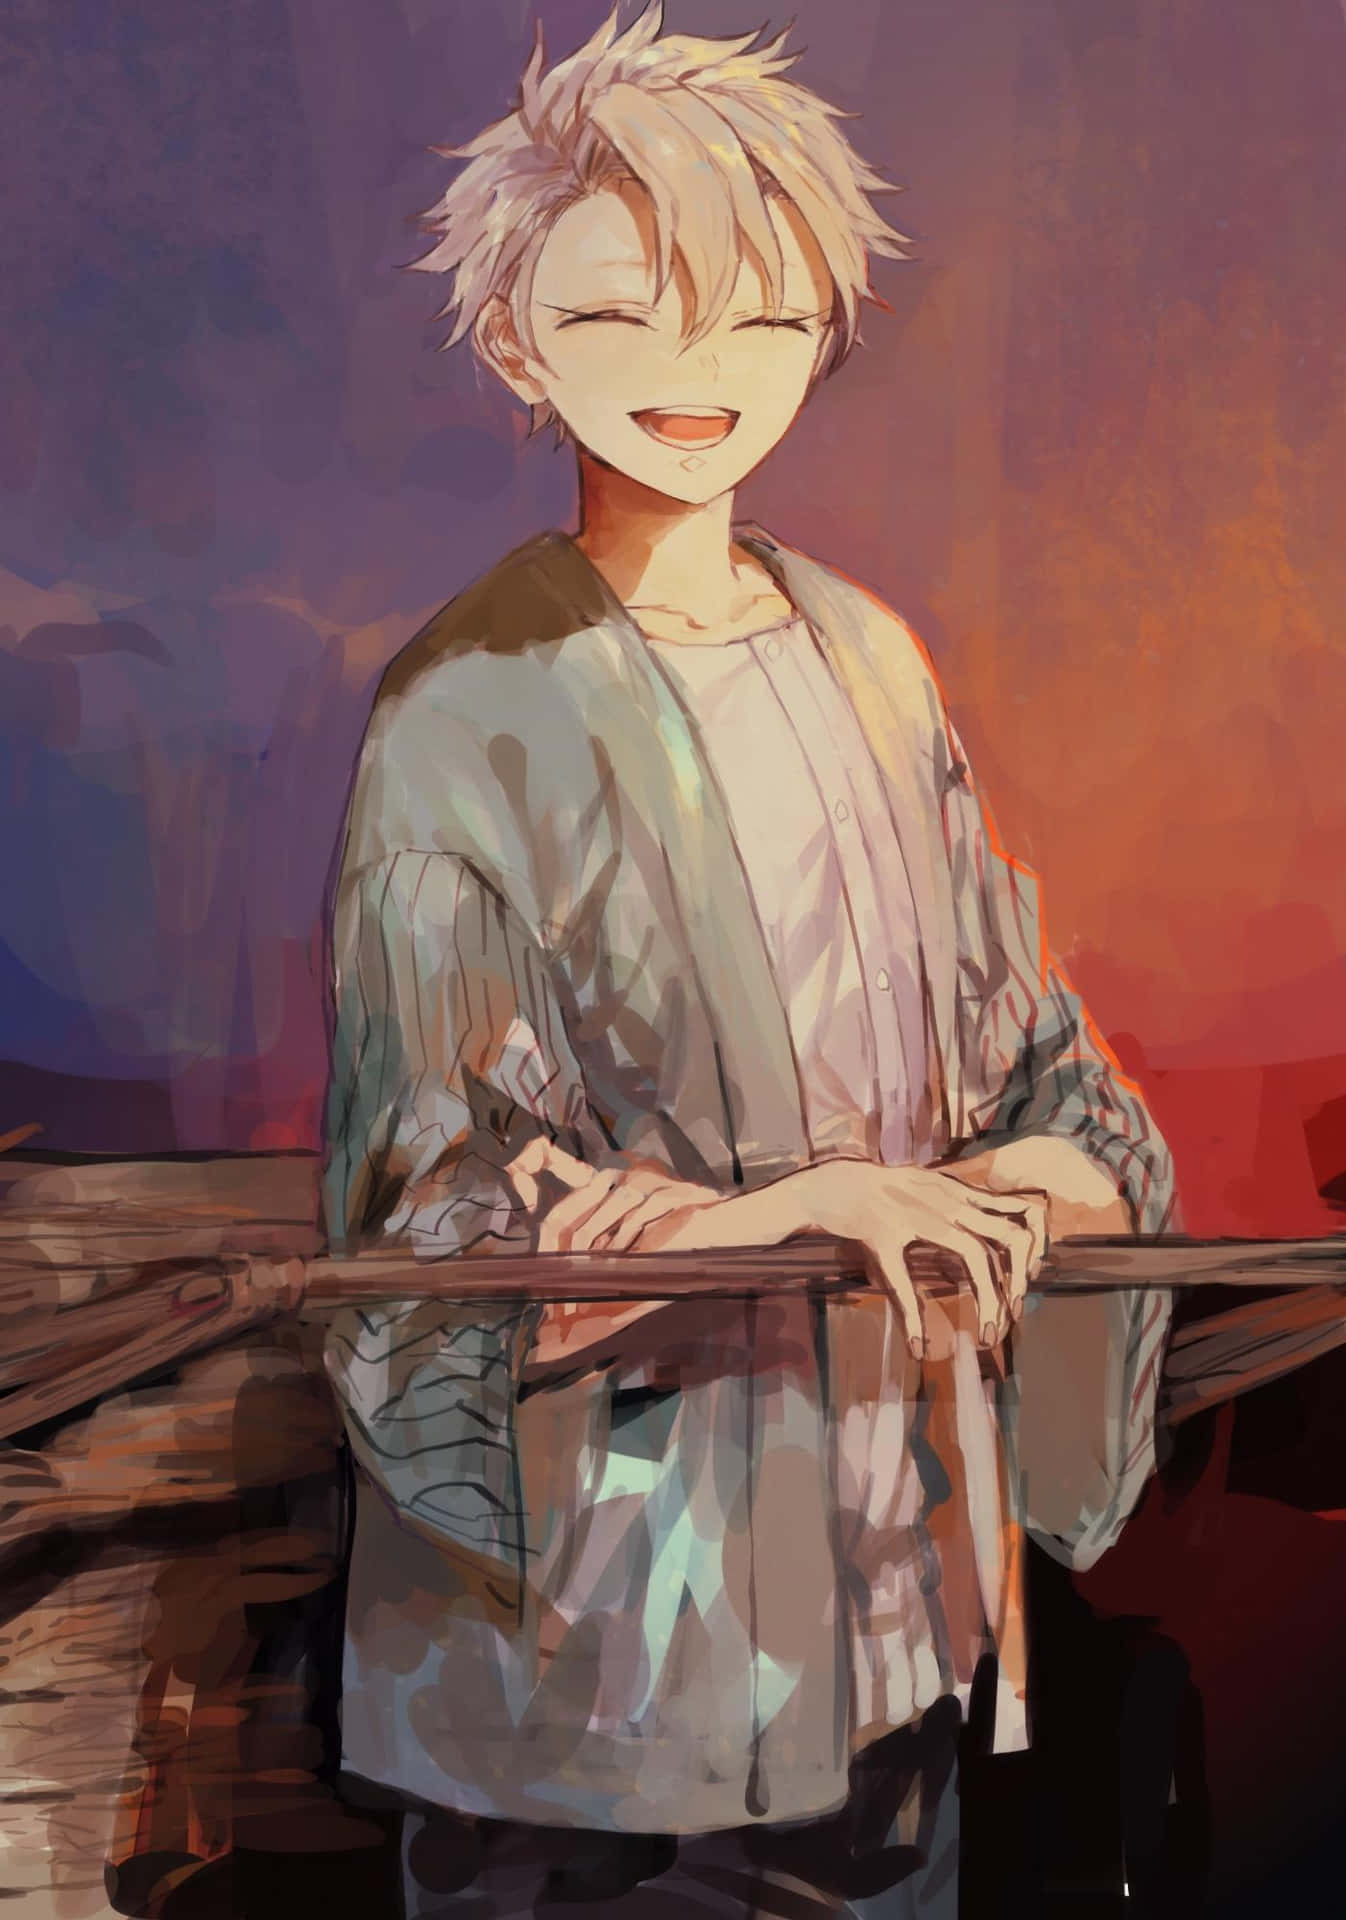 Smiling Anime Character Sunset Backdrop Wallpaper